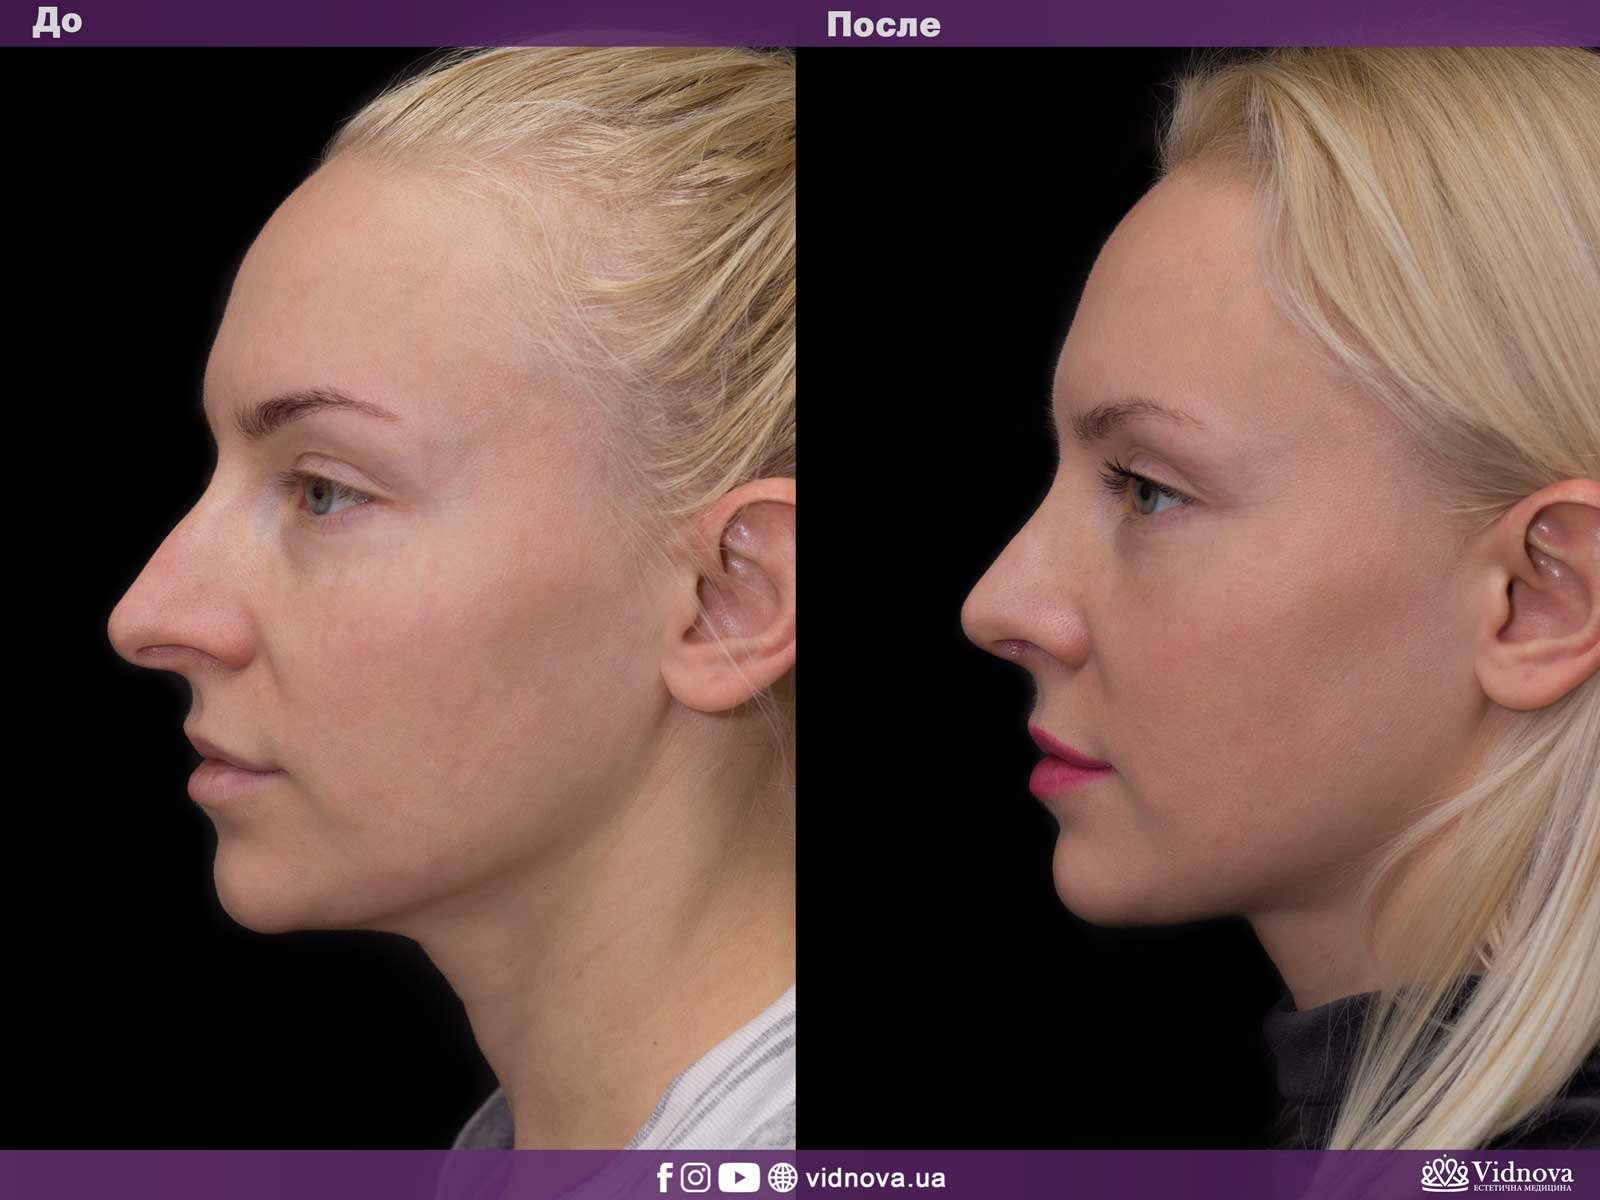 Фото ринопластики до и после нос. Гадагатль Анзаур Айдамирович ринопластика. Русецкий ринопластика.